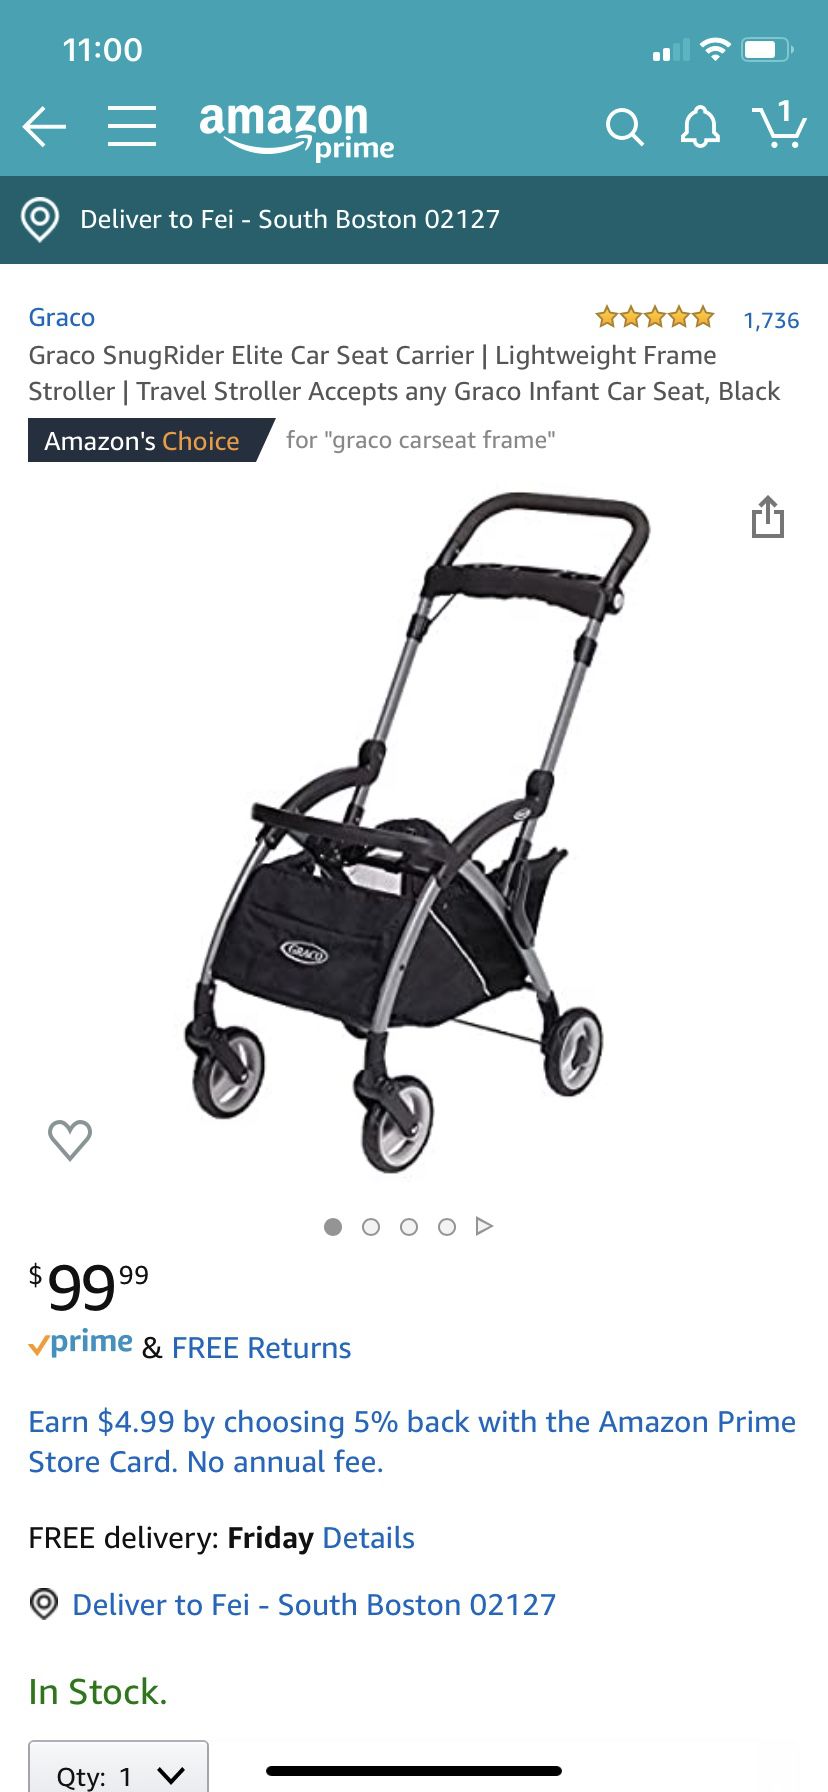 Graco snugrider elite car seat stroller (lightweight frame)